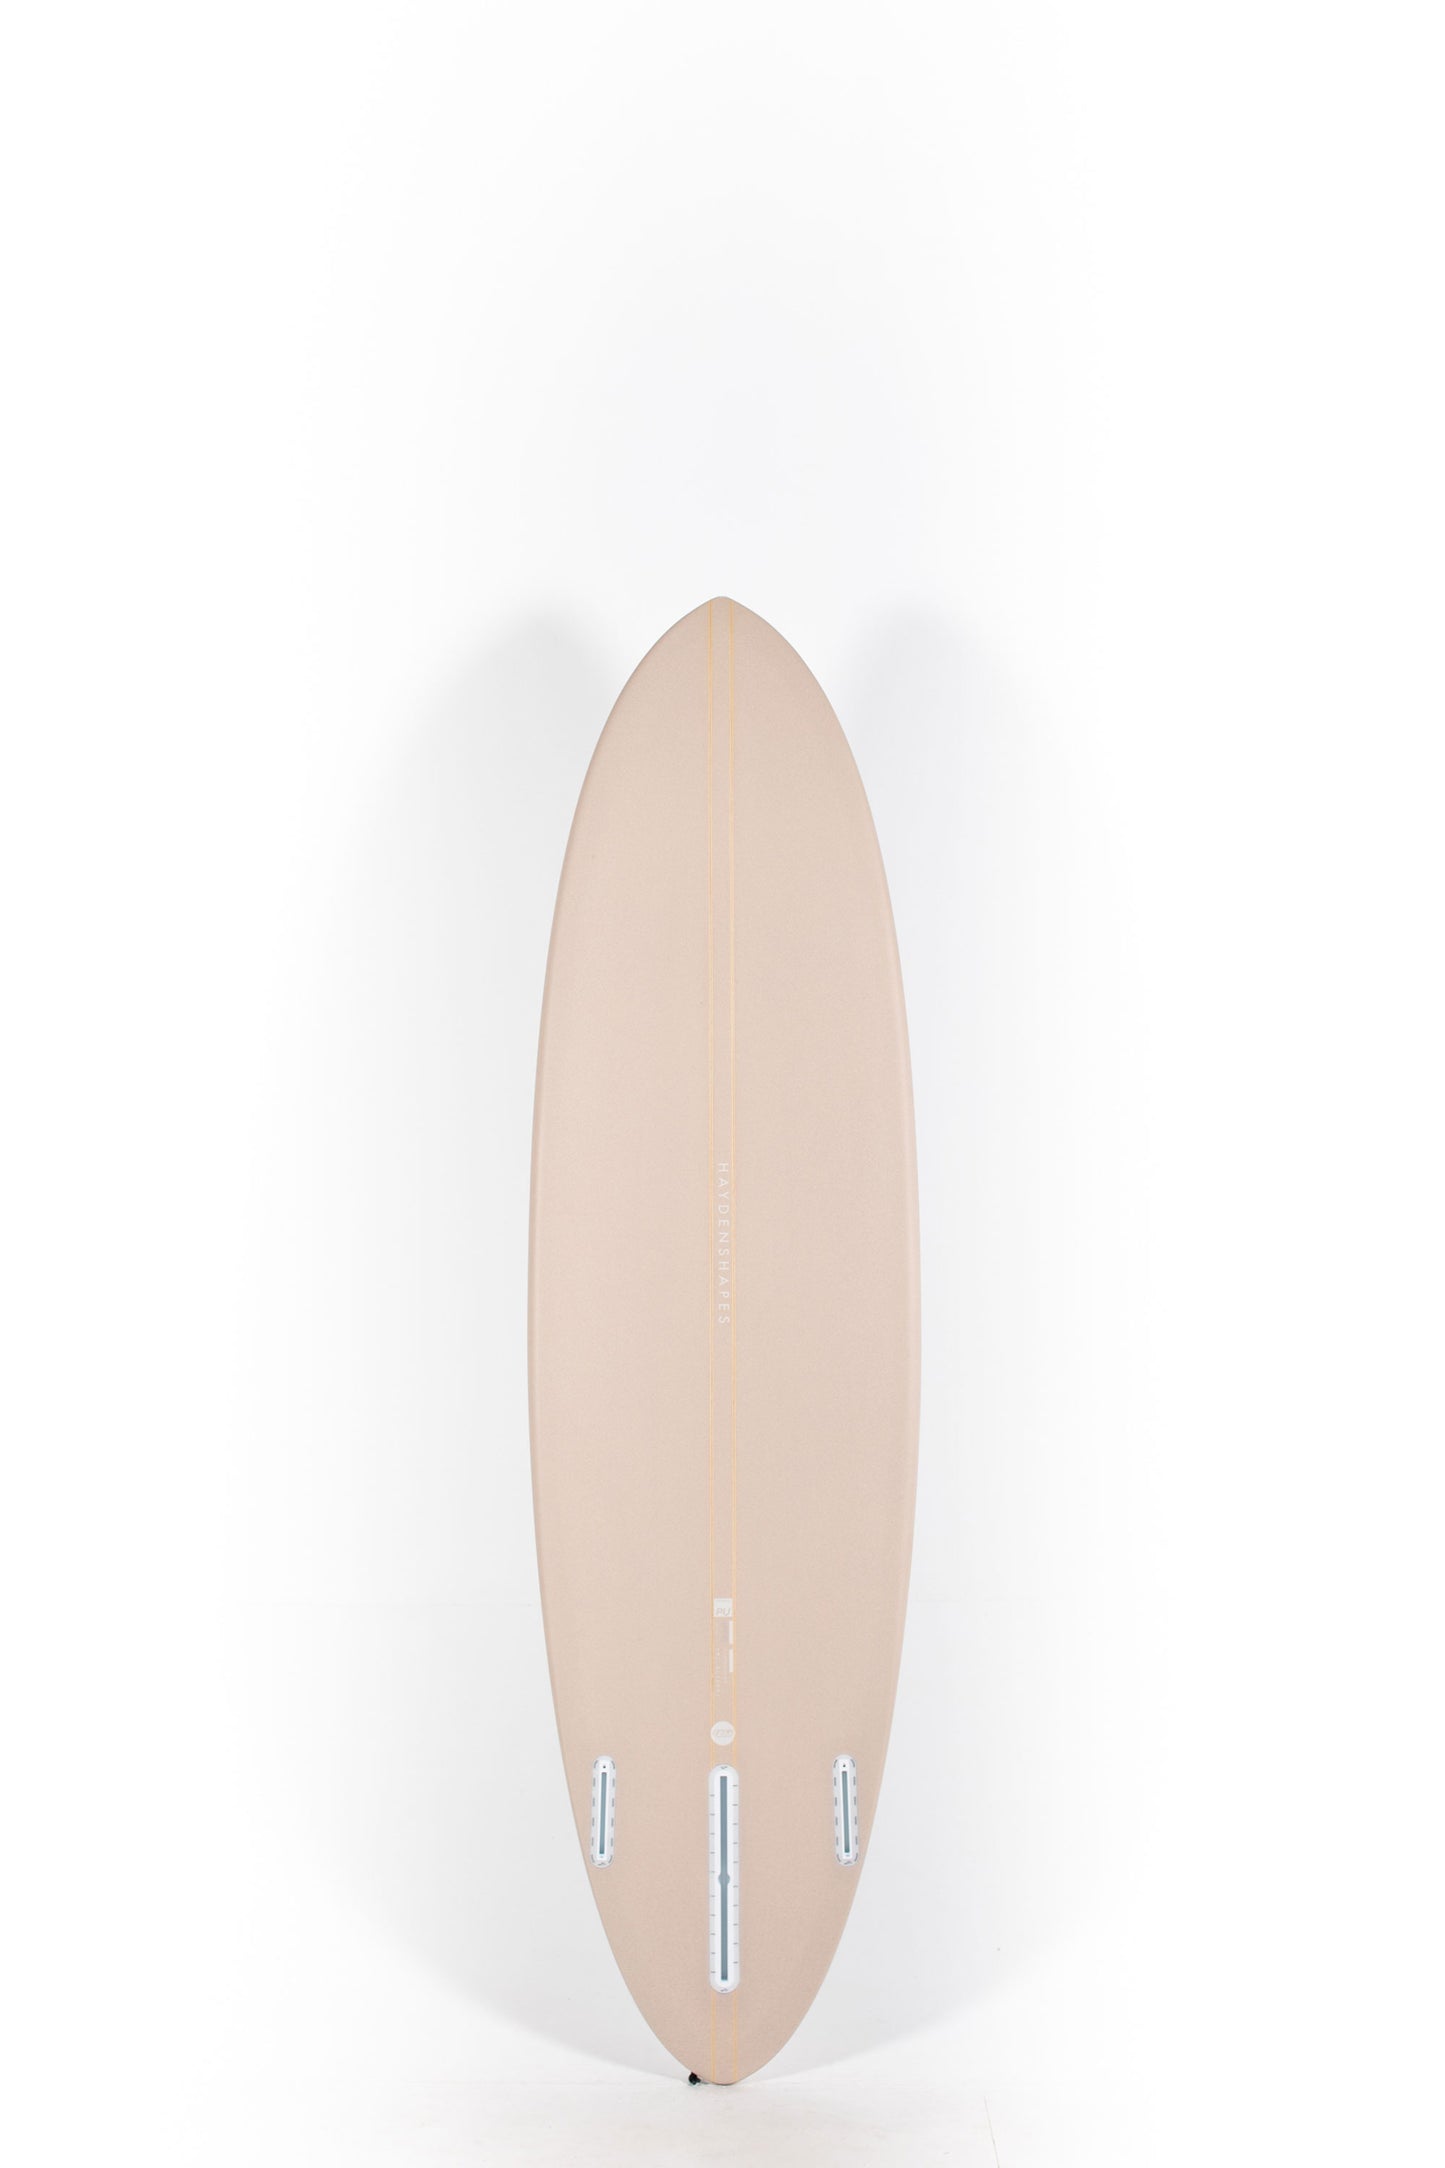 Pukas Surf Shop - HaydenShapes Surfboard - MID LENGTH GLIDER - DUST - 6'7" X 20 1/2" X 2 5/8" - 39.5L